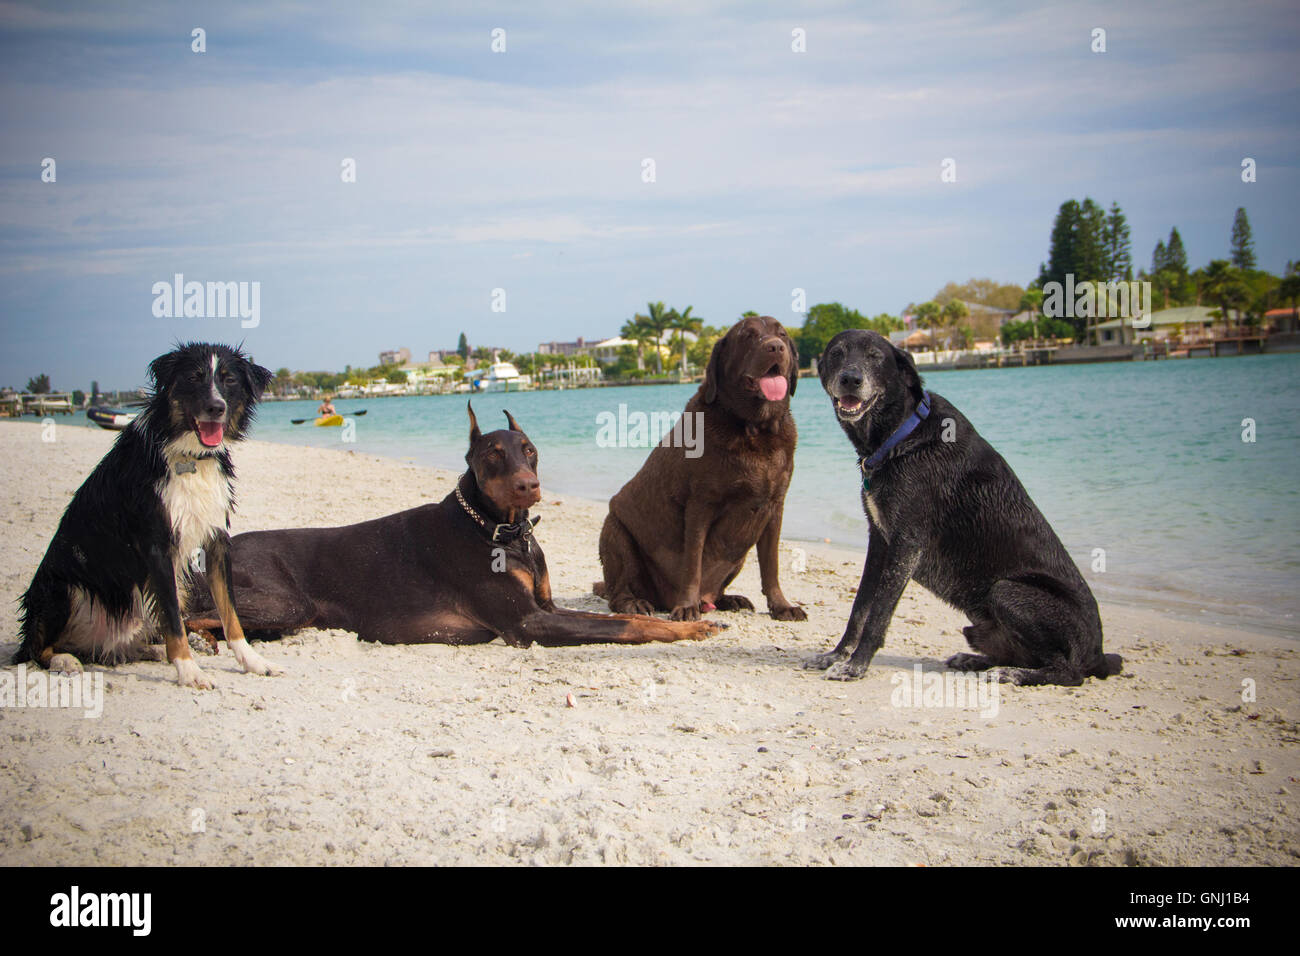 Four dogs sitting on beach, Florida, United States Stock Photo